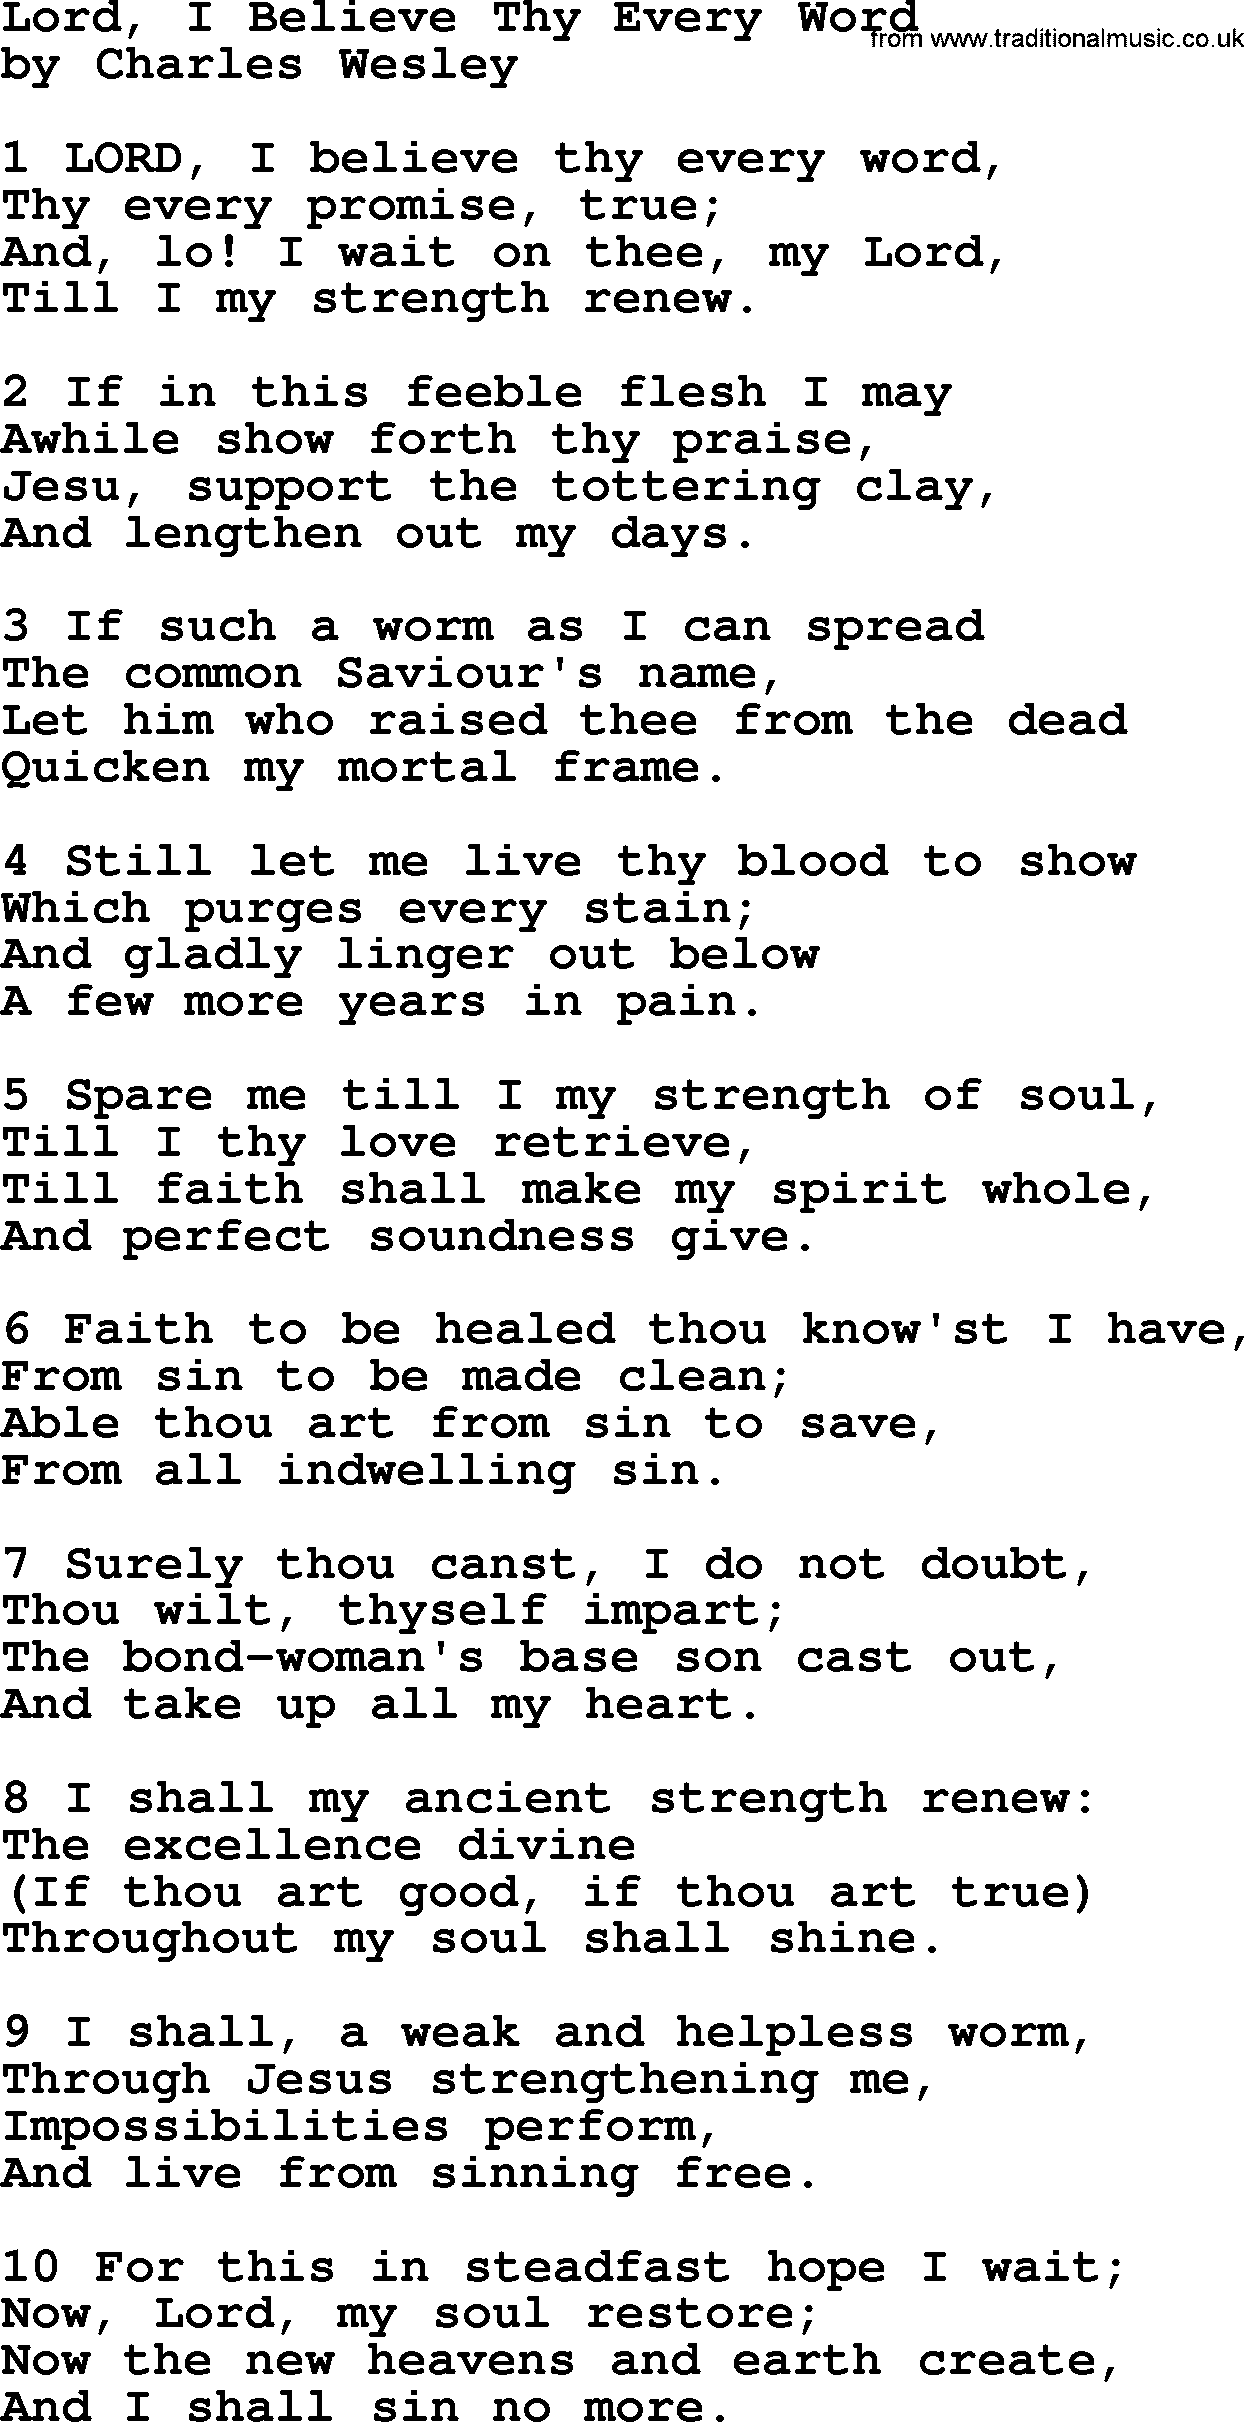 Charles Wesley hymn: Lord, I Believe Thy Every Word, lyrics